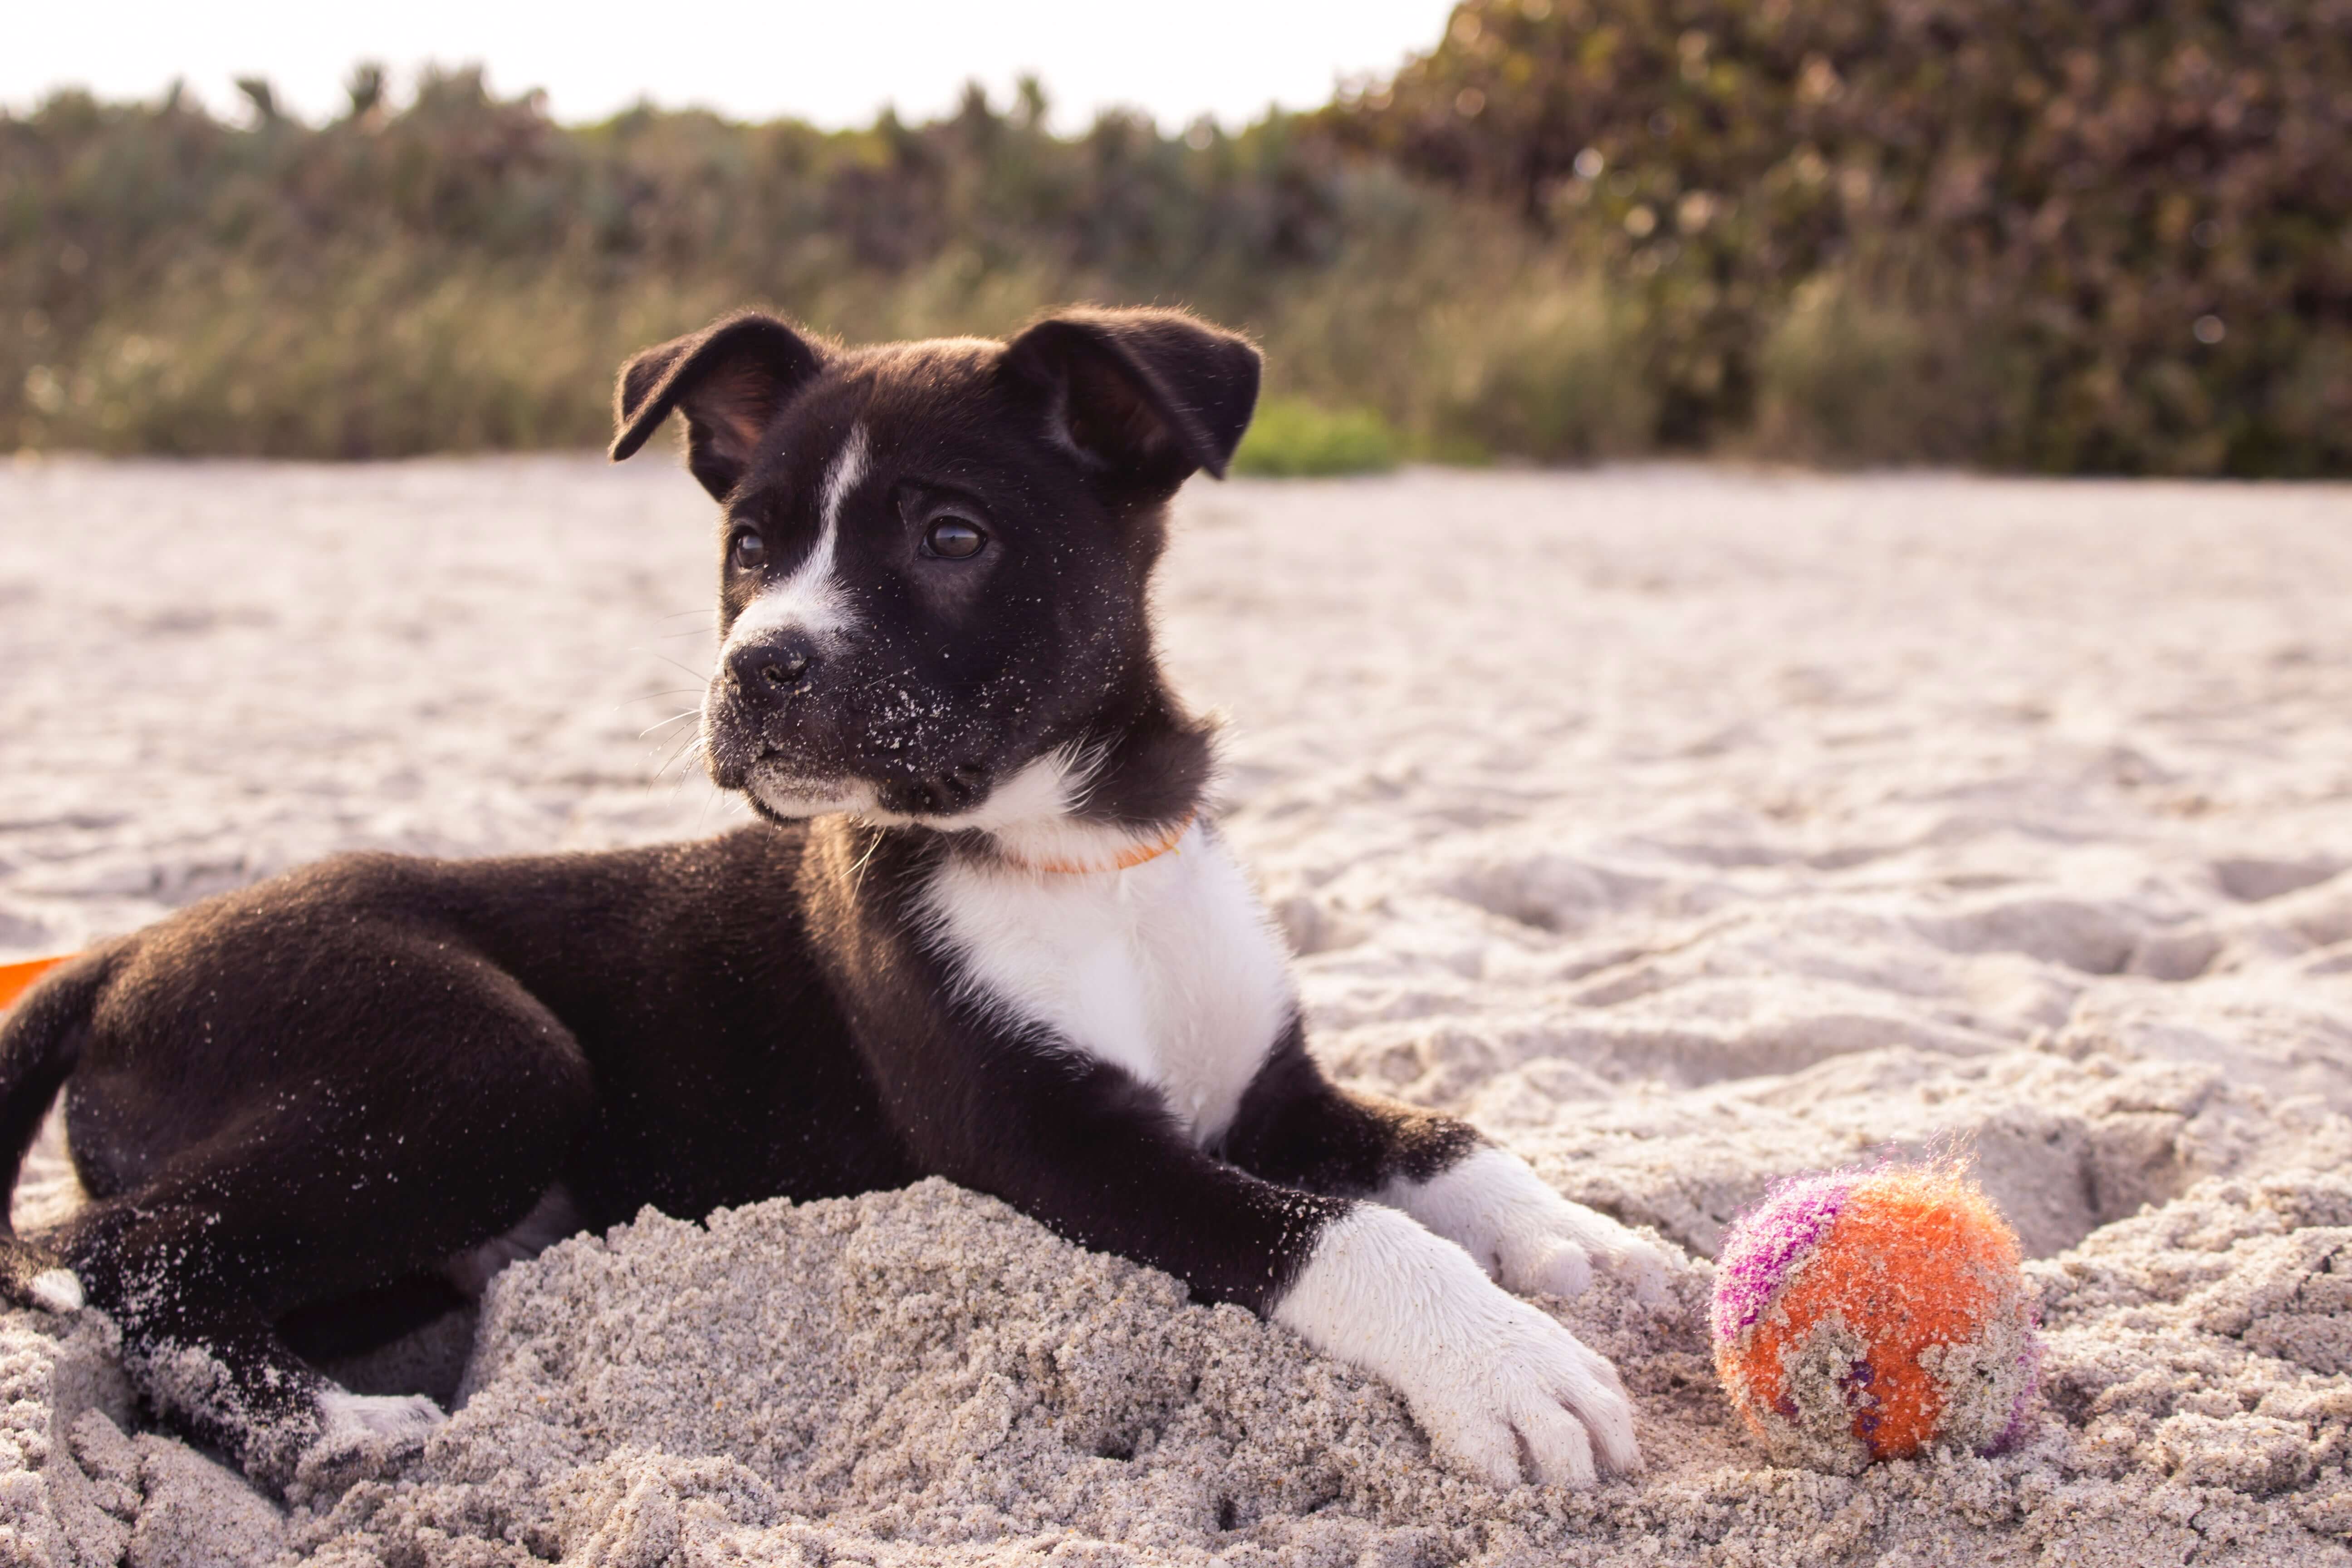 a dog friendly beach where the dog is lying on the sand